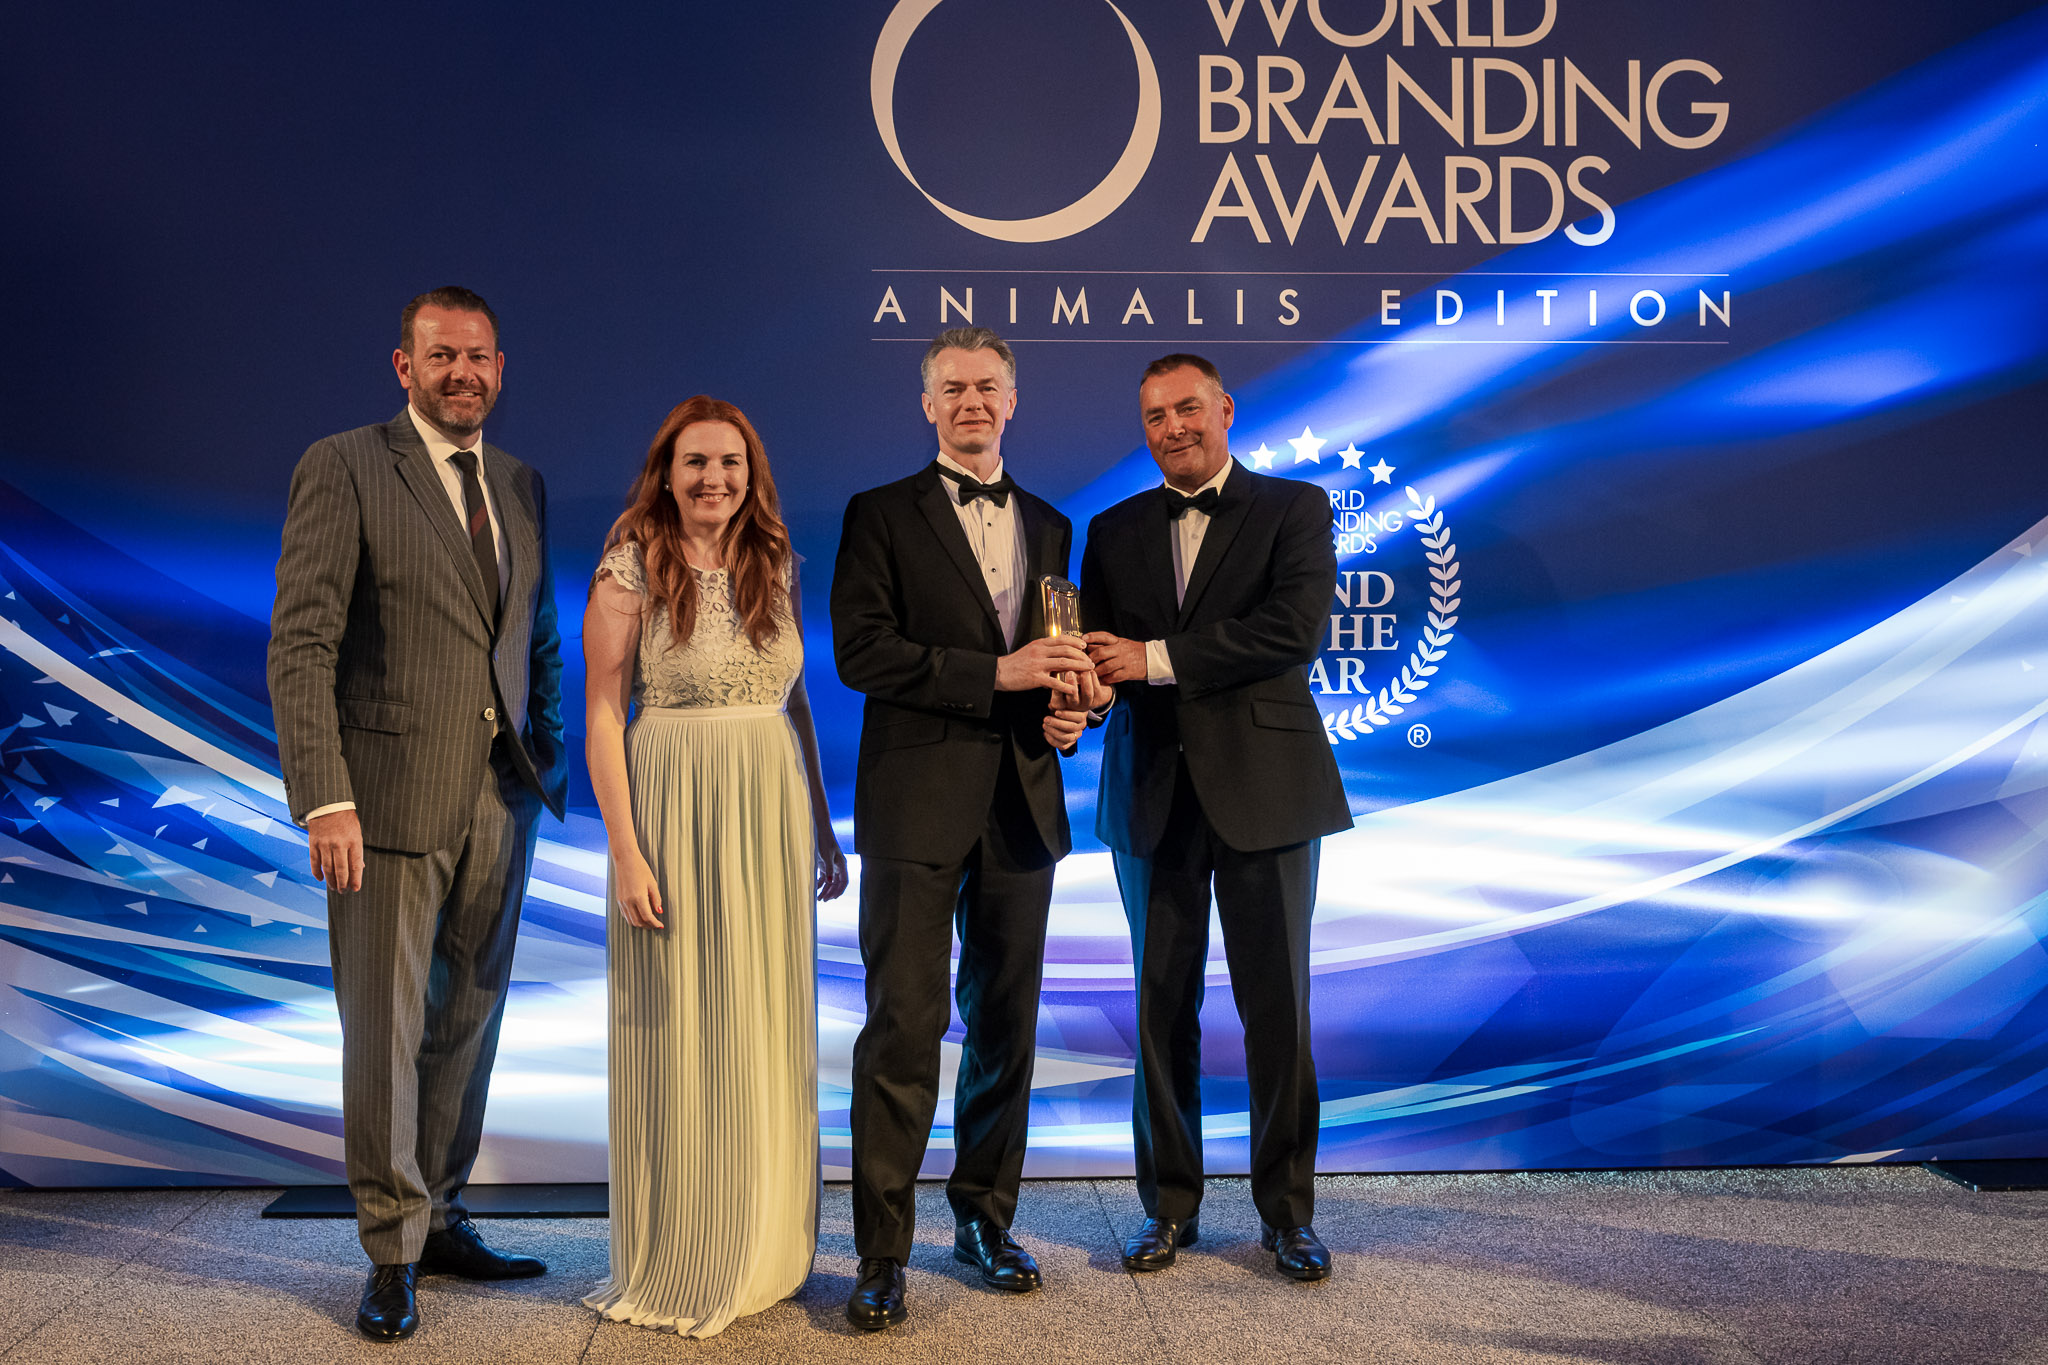 20190703_211858_world_branding_awards_animalis_7436